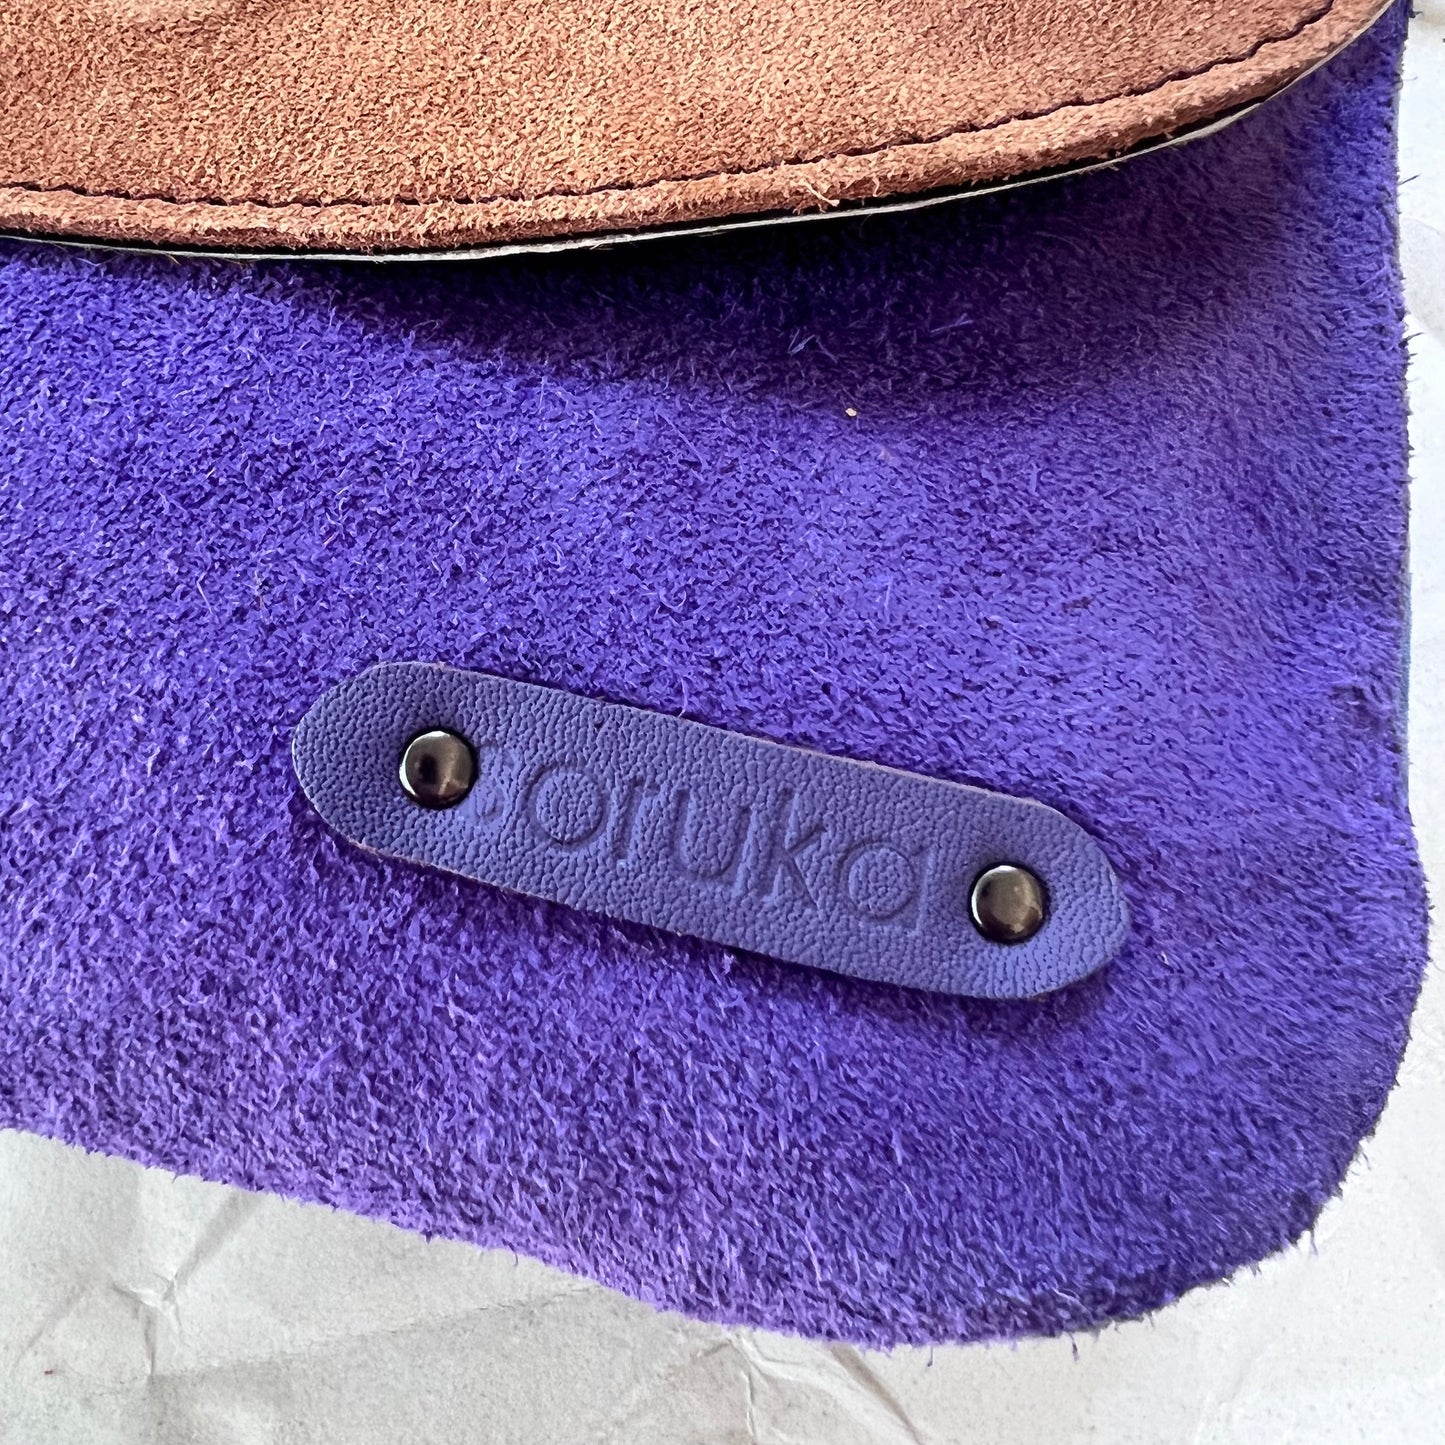 close-up of corner of purse showing "soruka" logo.